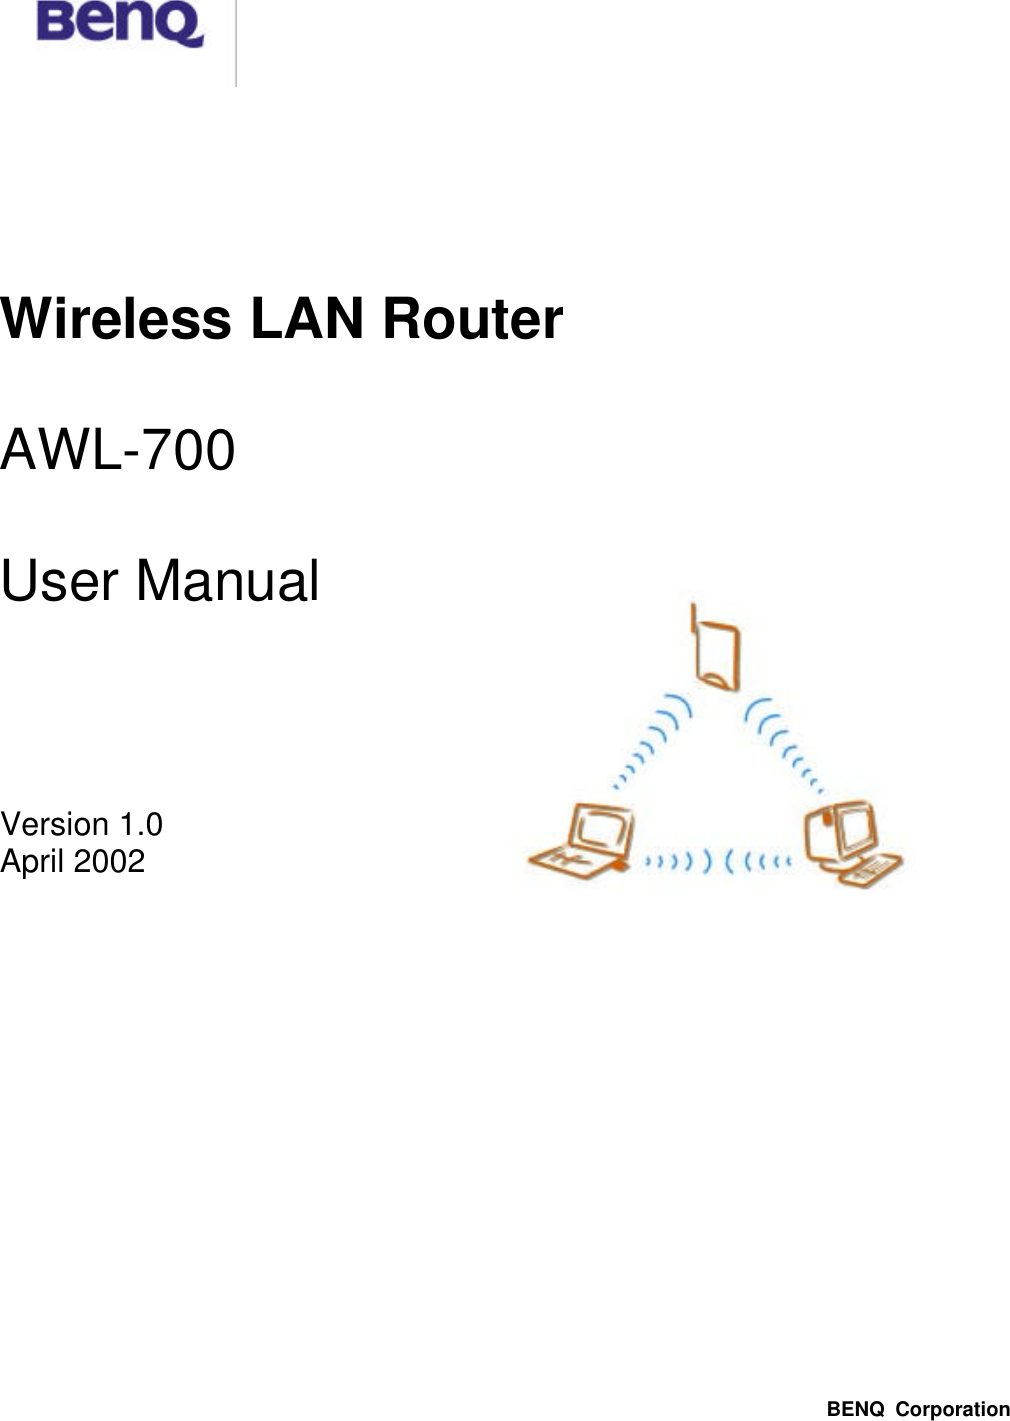  BENQ Corporation            Wireless LAN Router AWL-700 User Manual  Version 1.0   April 2002 